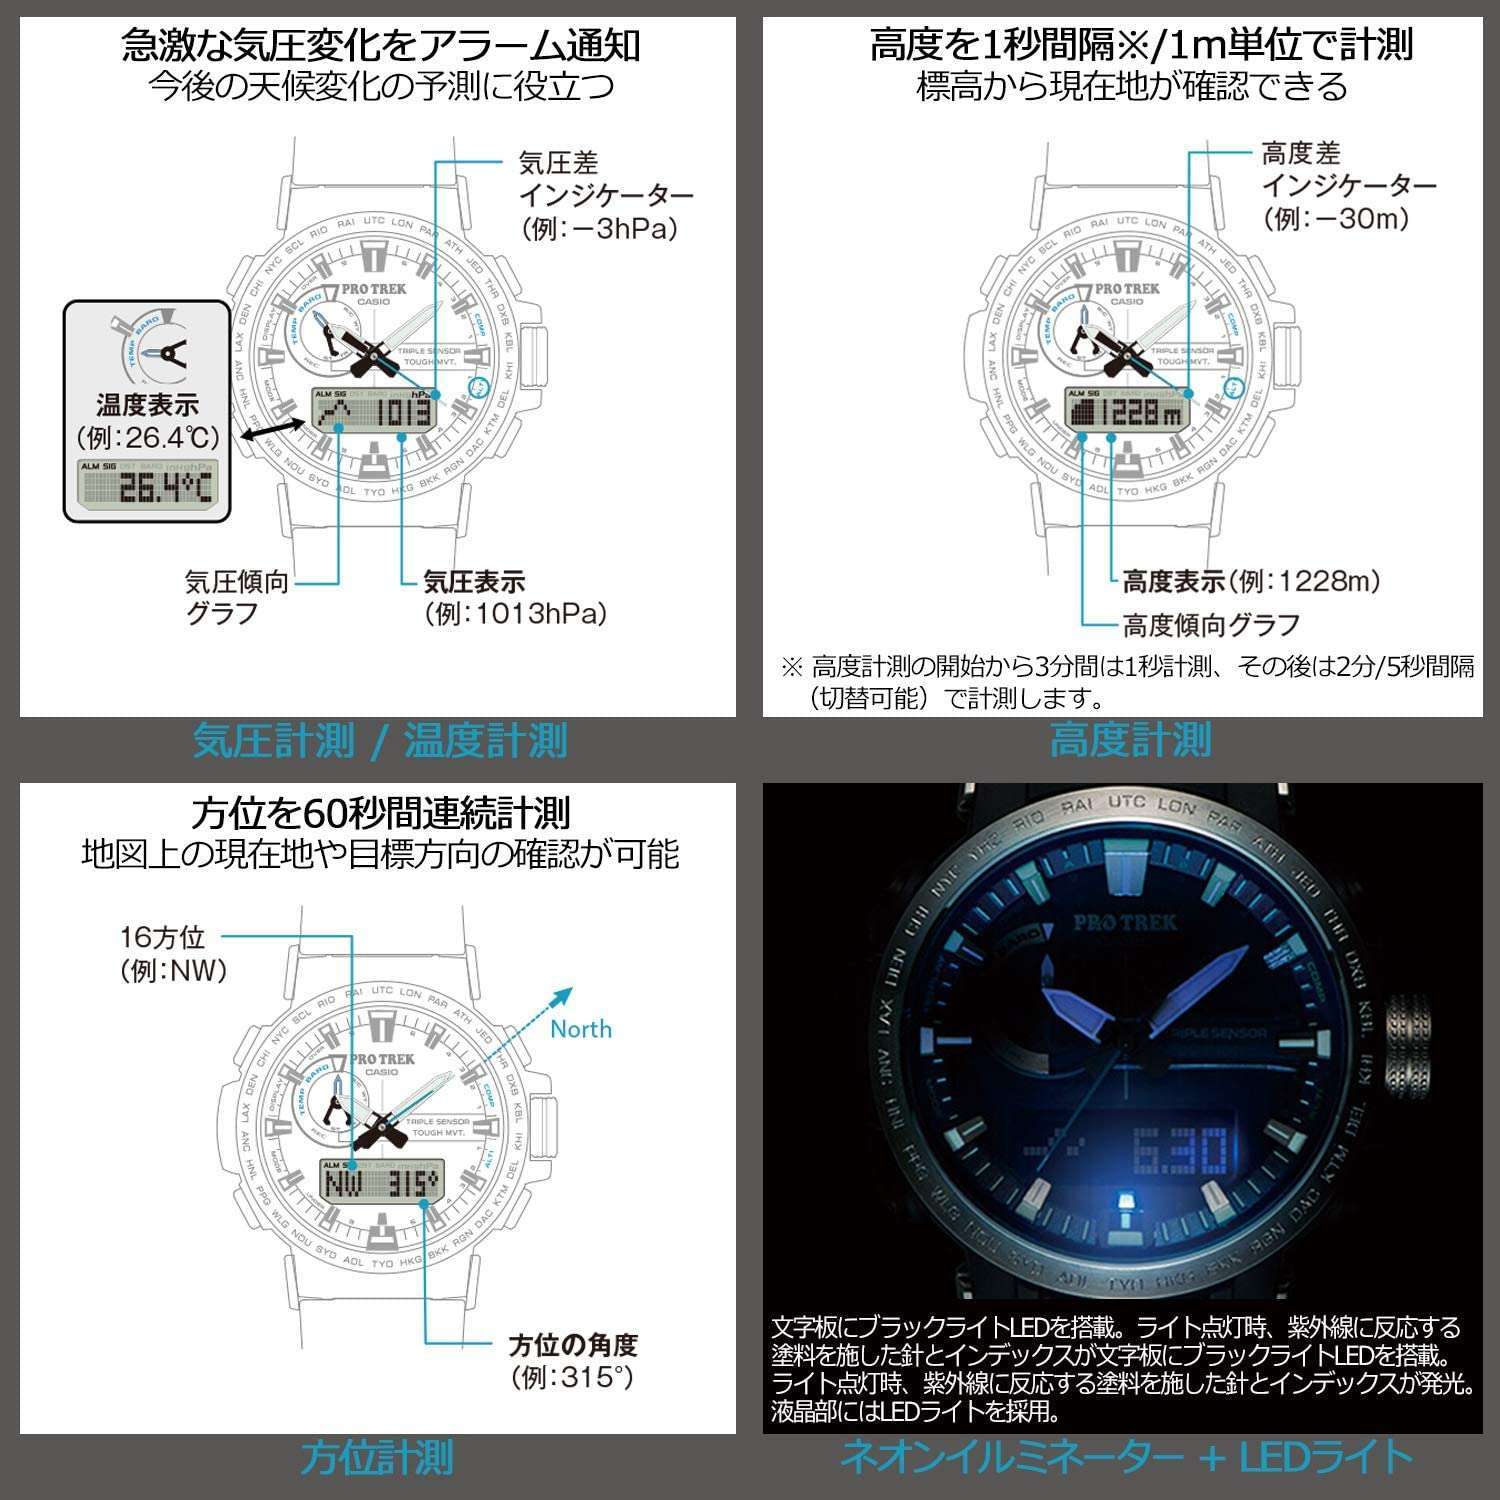 ROOK JAPAN:CASIO PROTREK CLIMBER LINE JDM MEN WATCH PRW-60FC-1AJF,JDM Watch,Casio Protrek